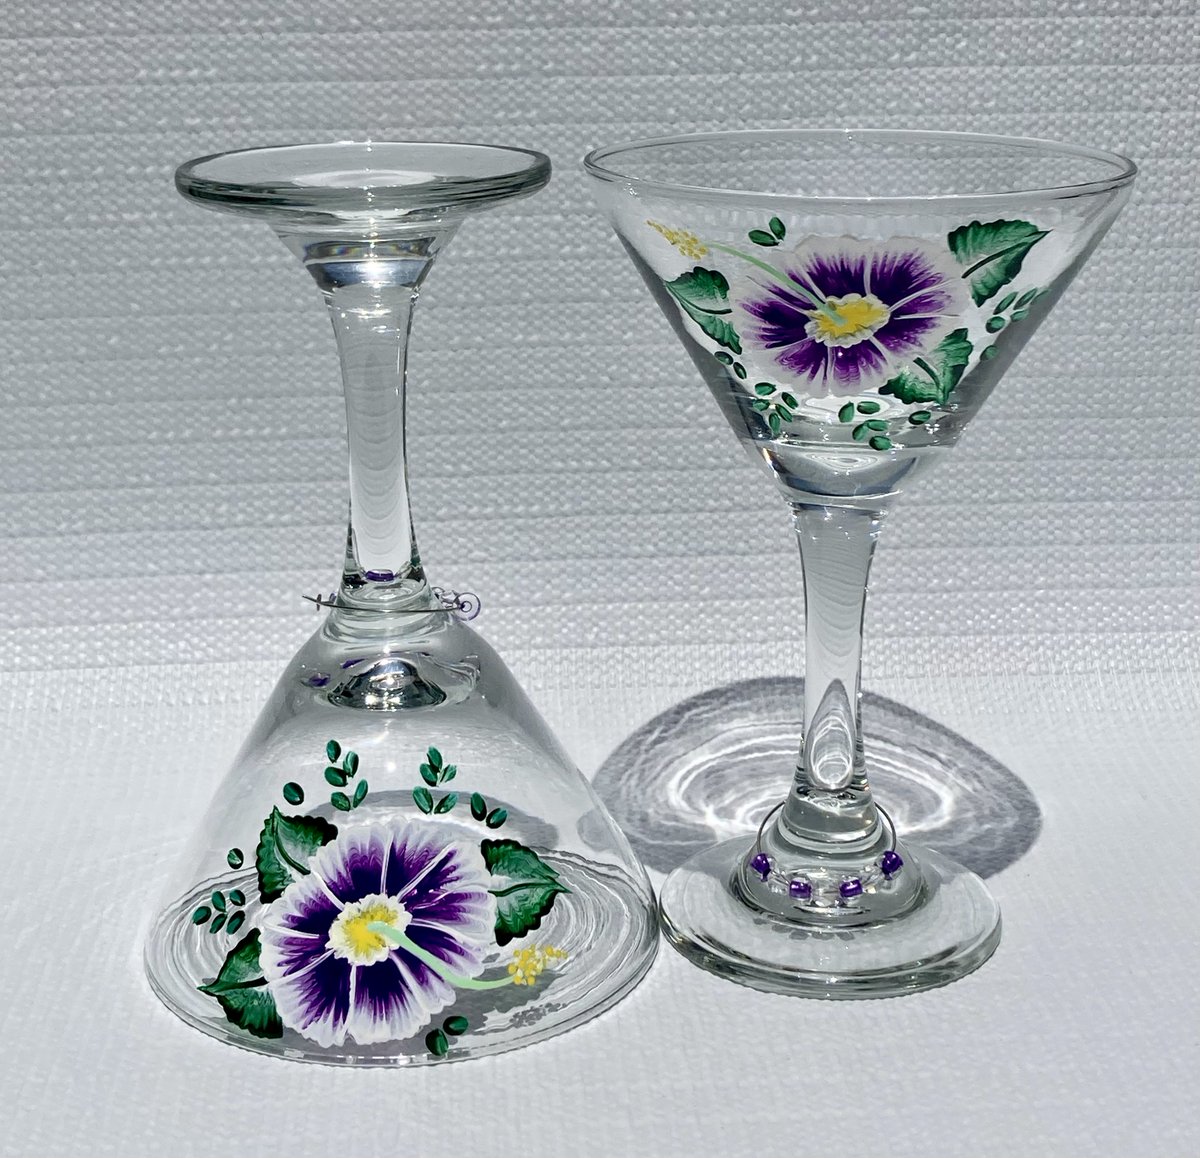 Unique gift for her etsy.com/listing/123984… #martiniglasses #uniquegifts #MothersDayGifts #SMILEtt23 #CraftBizParty #etsy #etsyshop #etsygifts #shopsmall #art